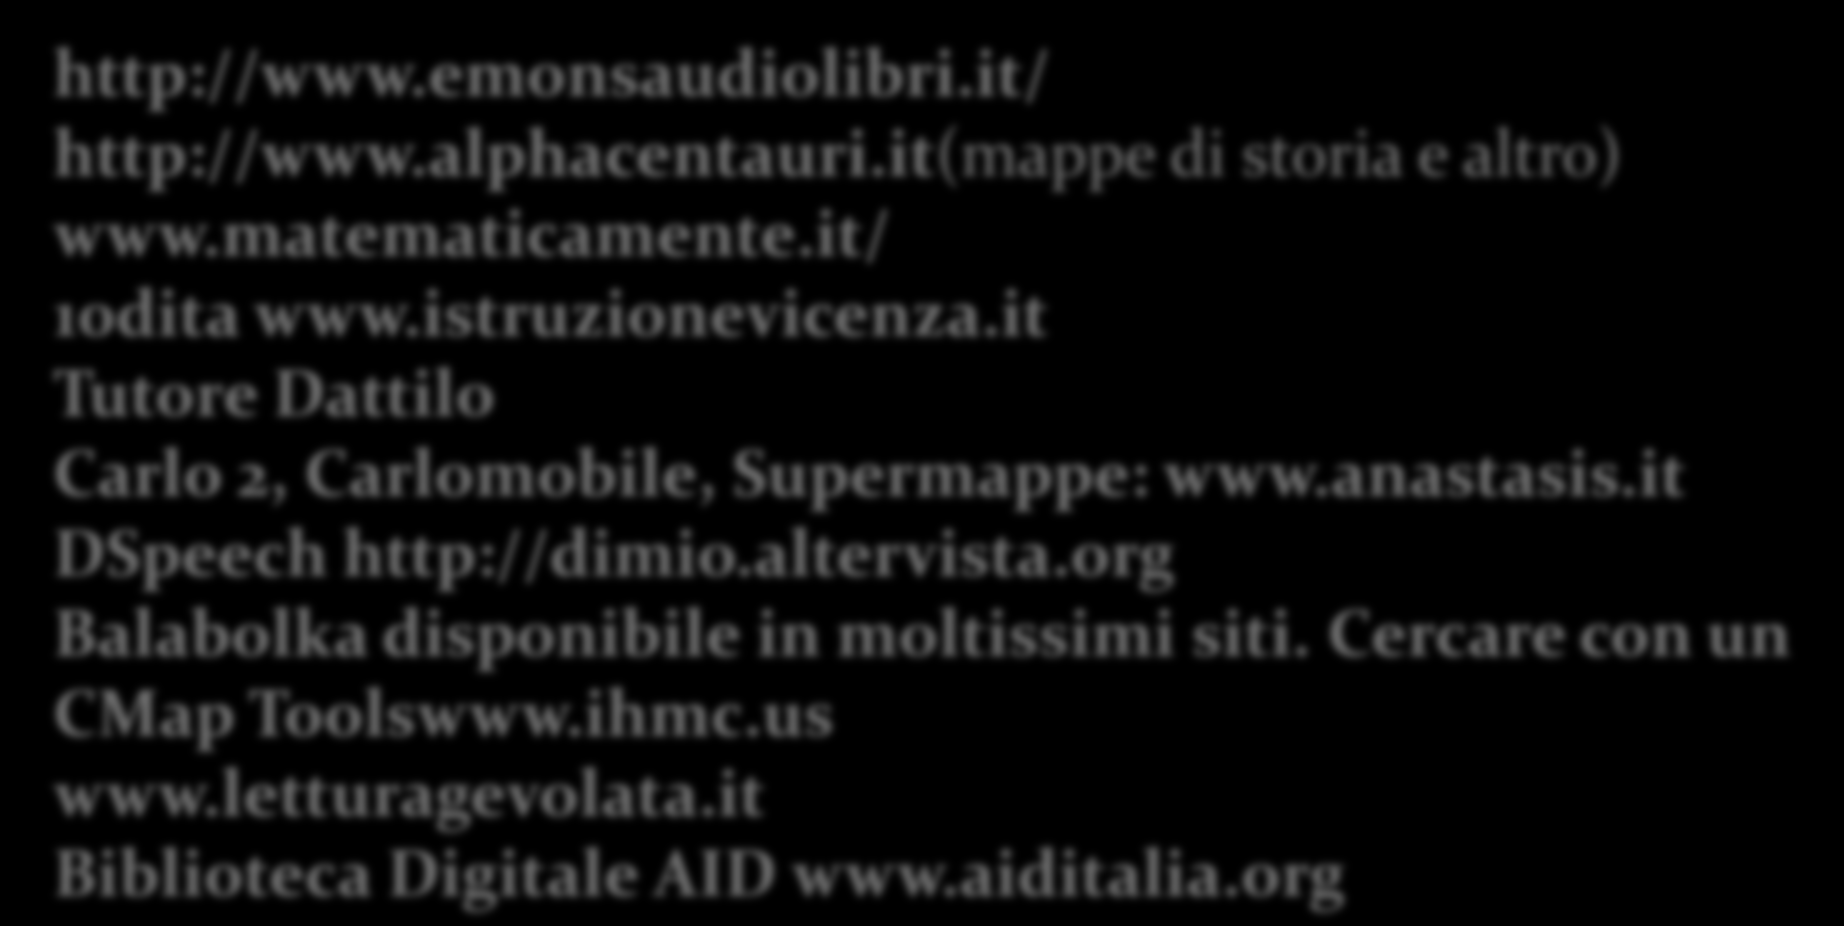 Siti web http:www.studioinmappa.it/ http://www.emonsaudiolibri.it/ http://www.alphacentauri.it(mappe di storia e altro) www.matematicamente.it/ 10dita www.istruzionevicenza.